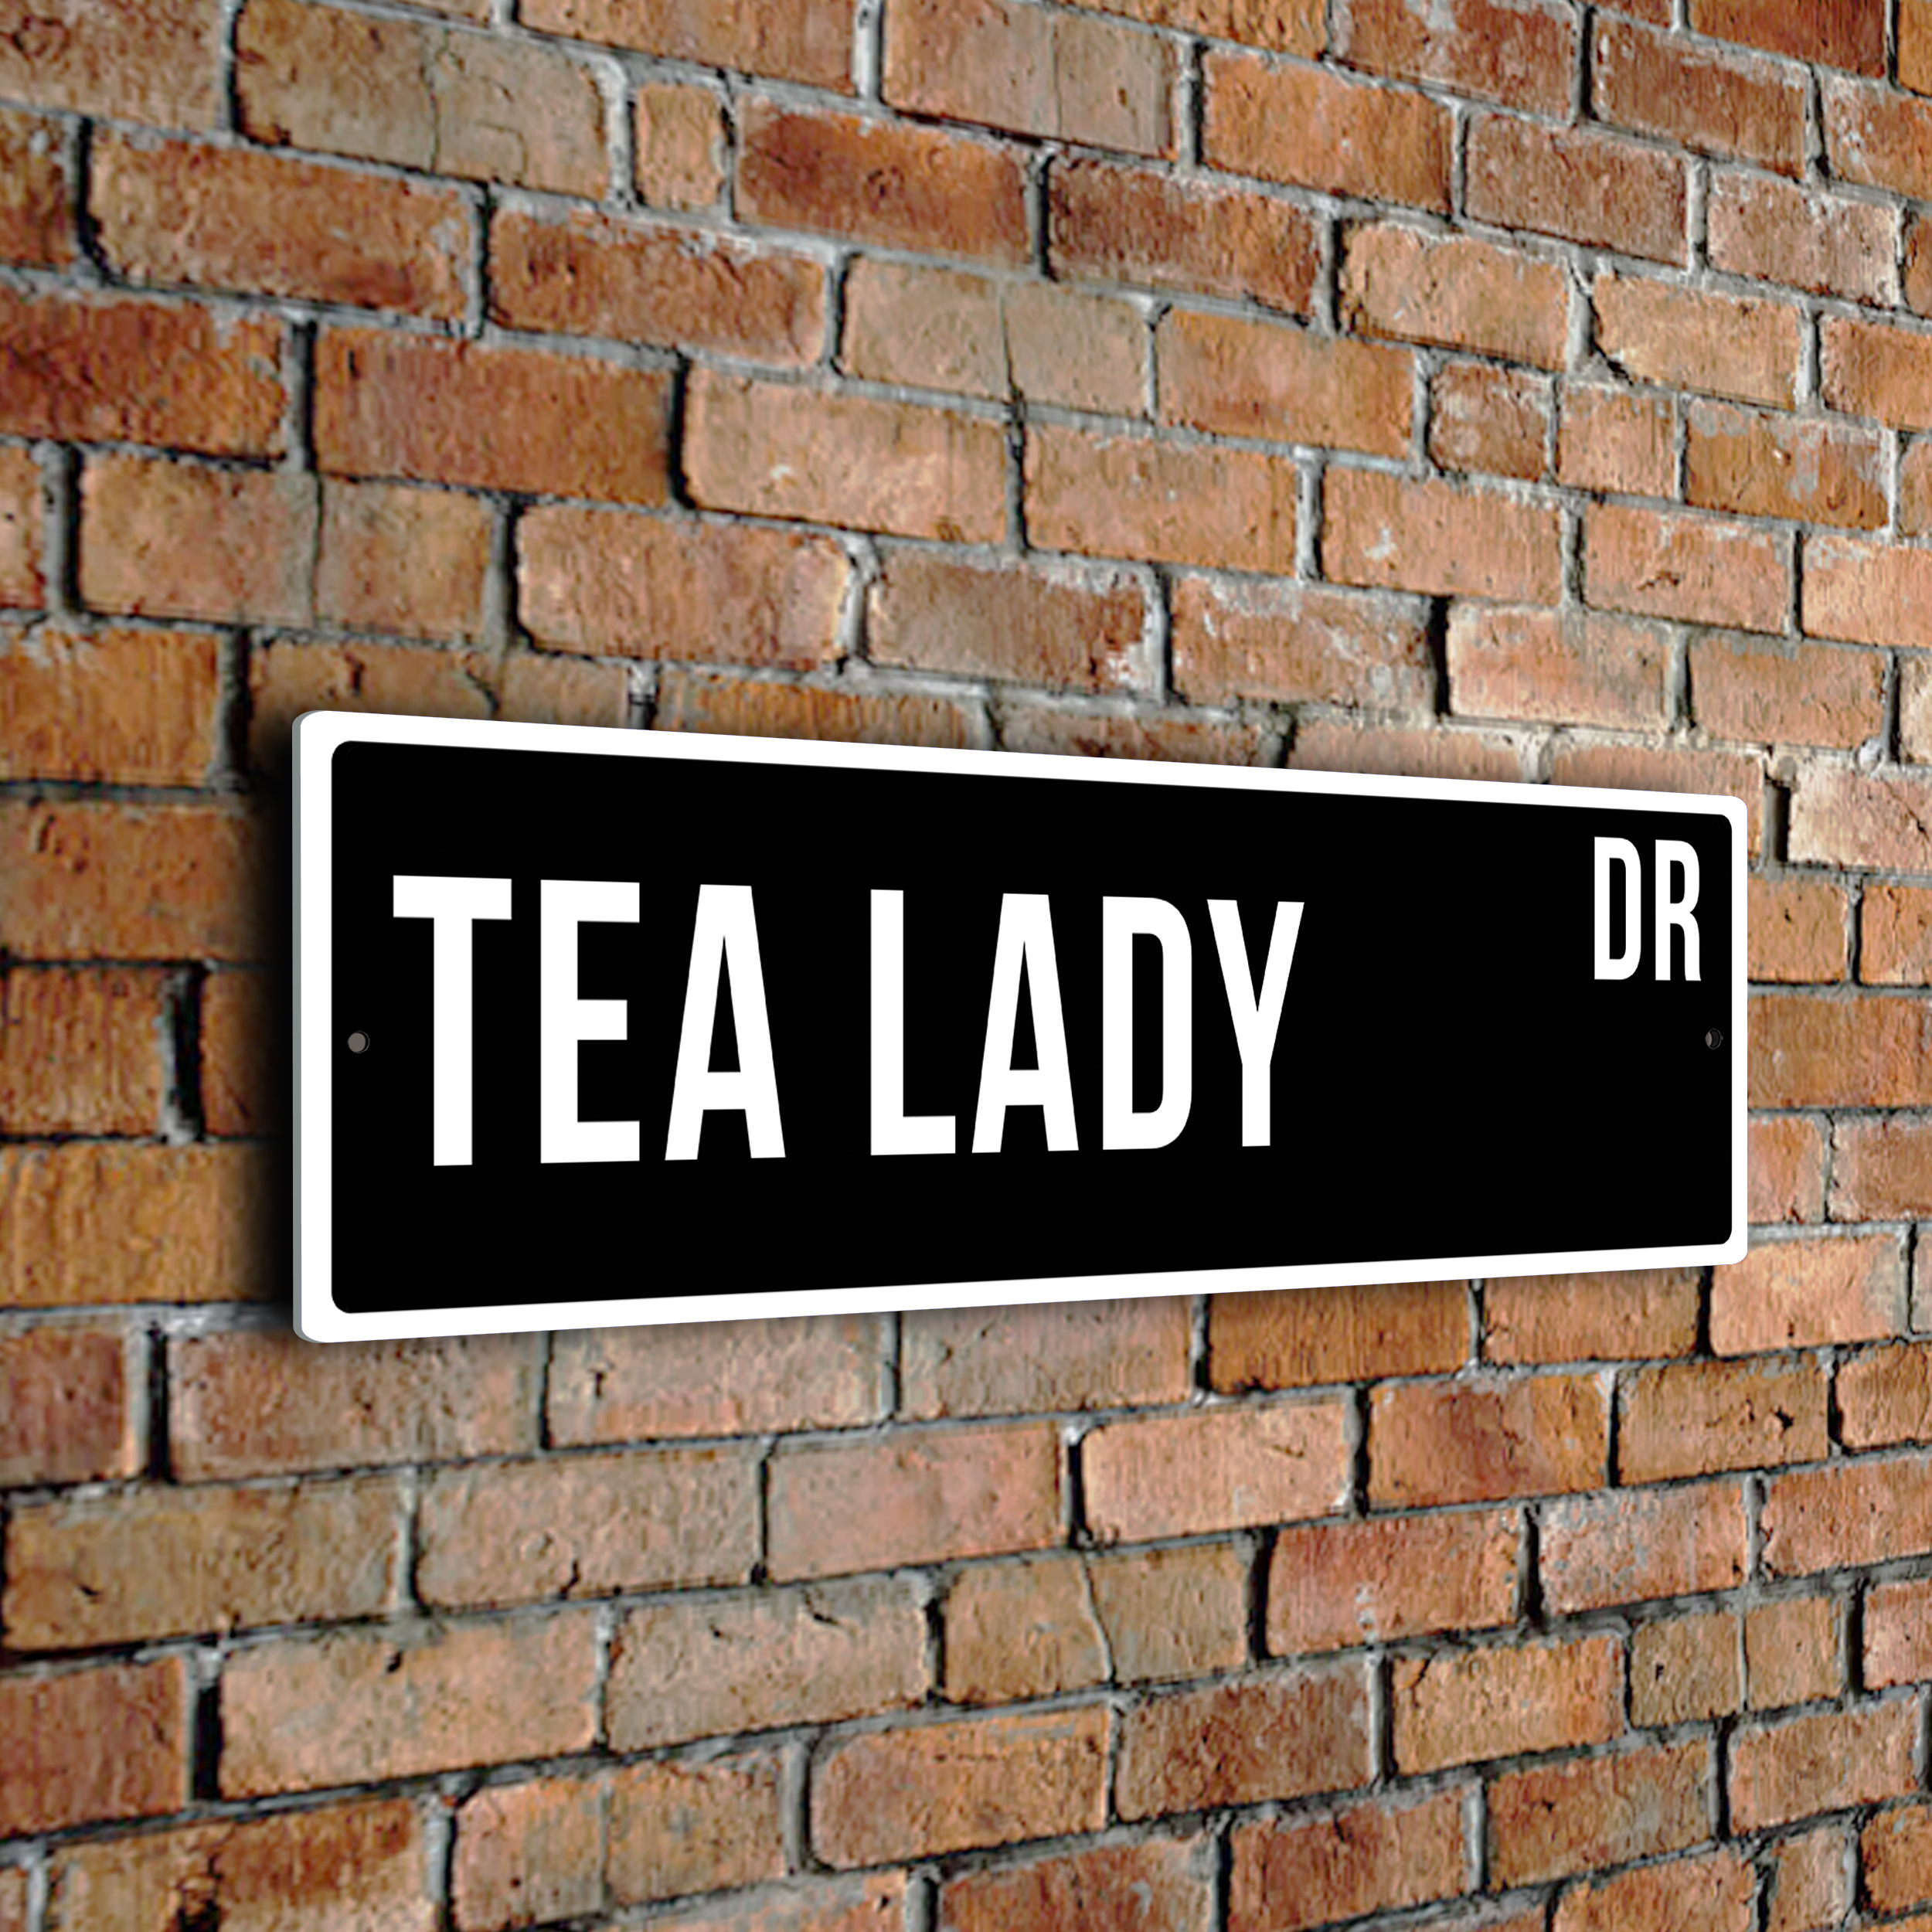 Tea-Lady street sign